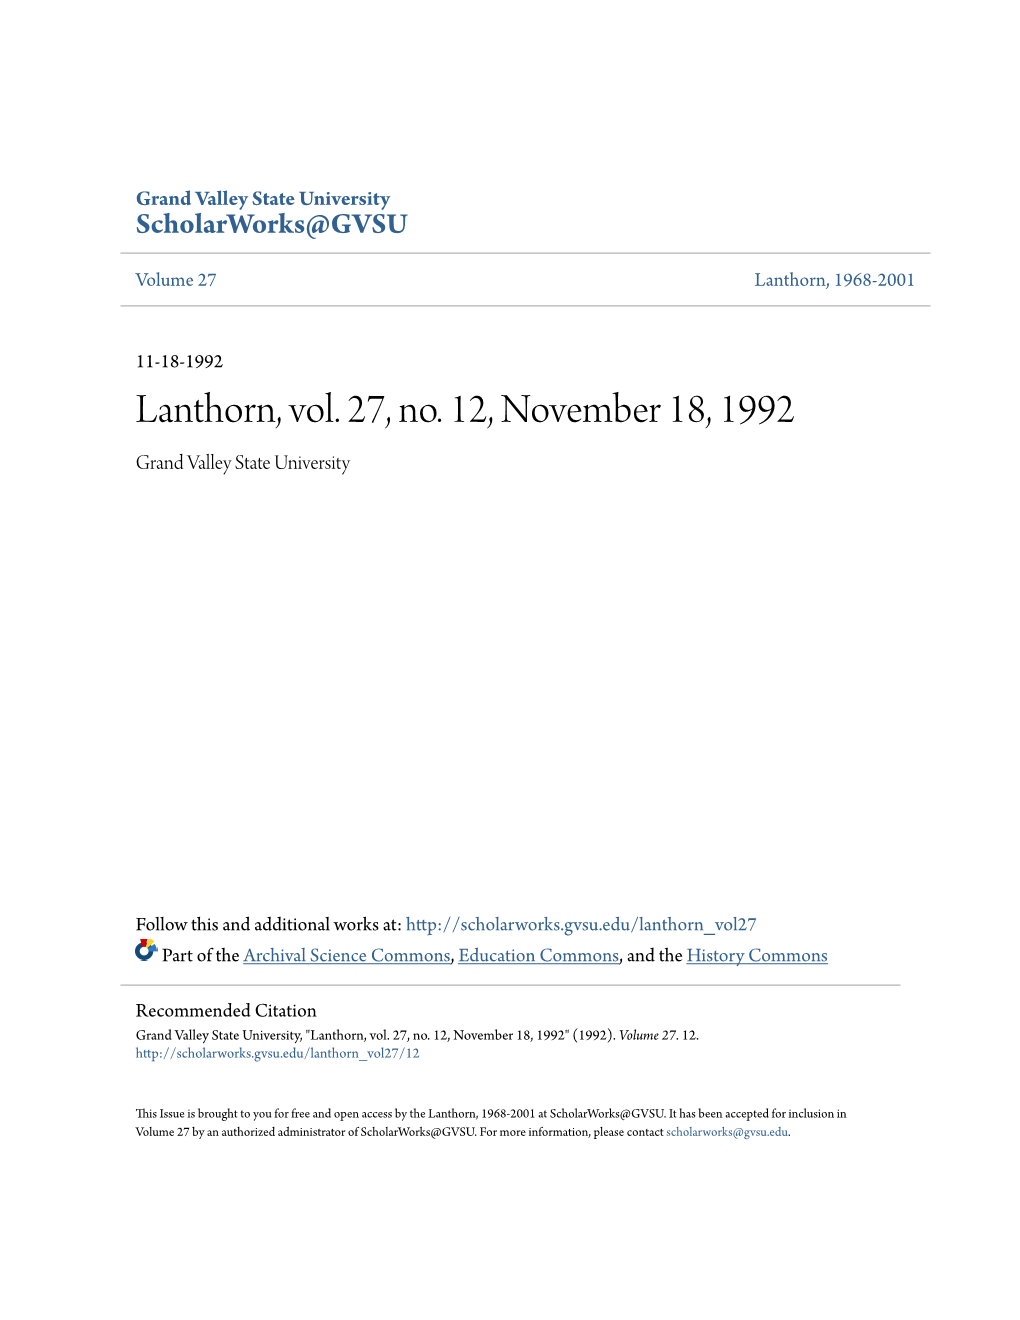 Lanthorn, Vol. 27, No. 12, November 18, 1992 Grand Valley State University